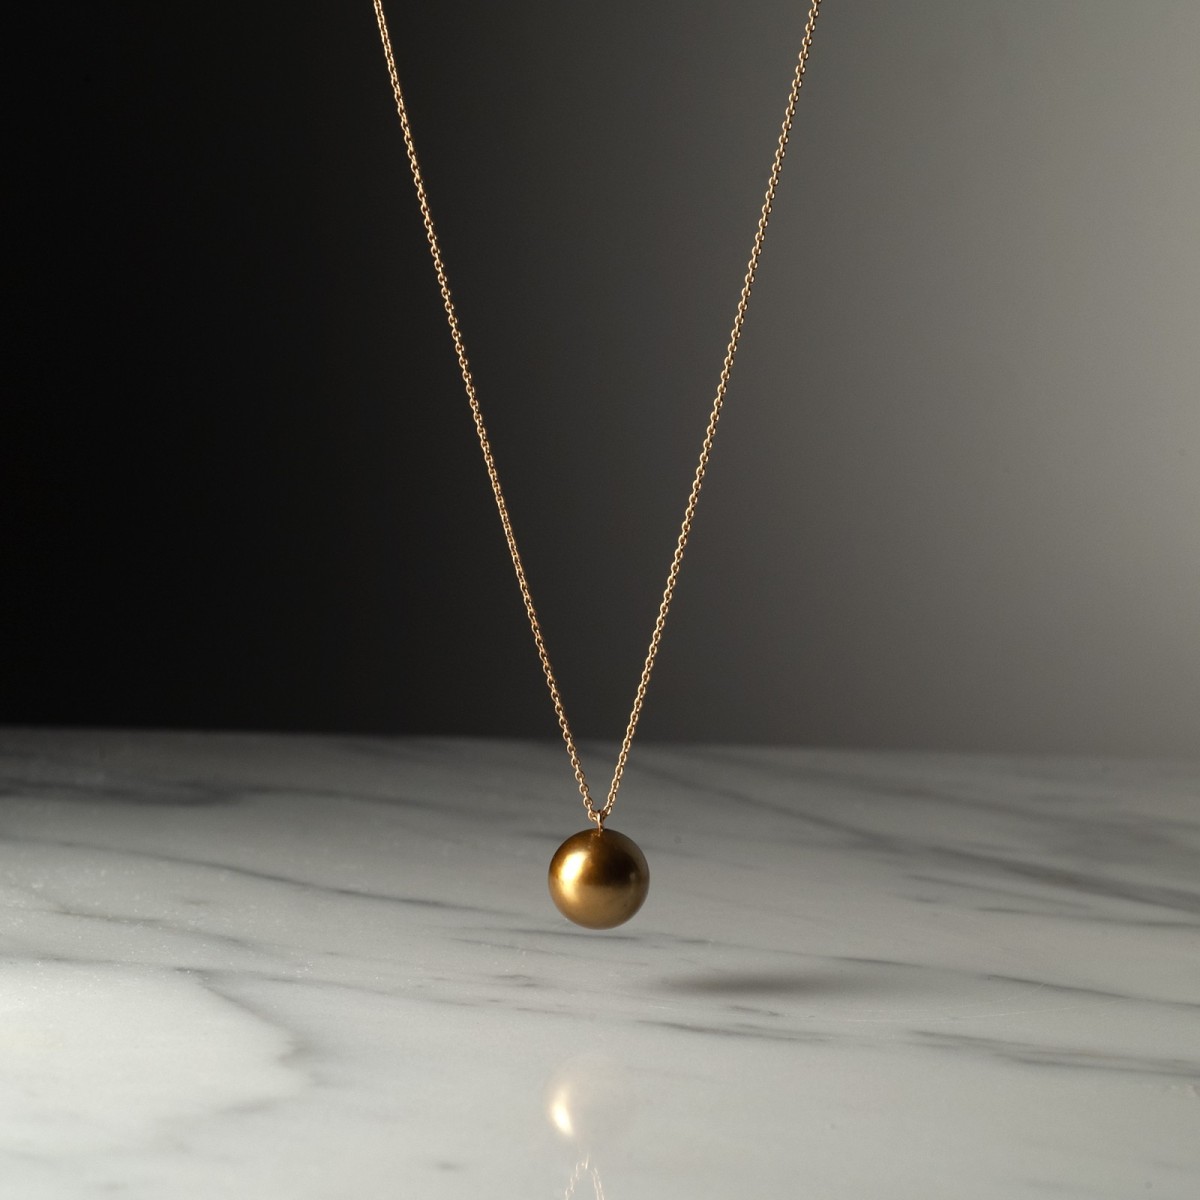 JO GM 2206 - Handmade necklace